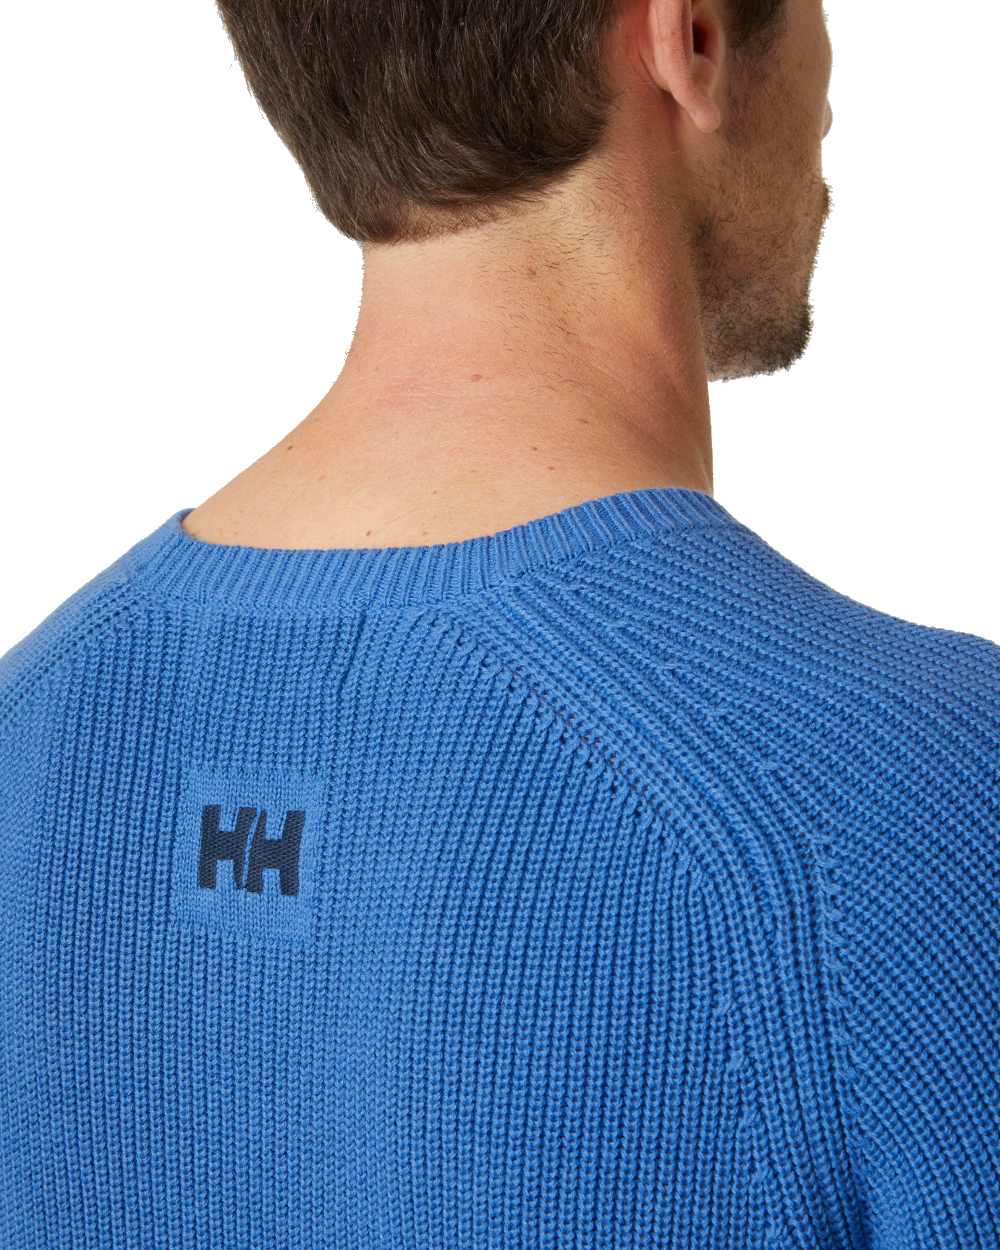 Azurite coloured Helly Hansen Mens Dock Ribknit Sweater on white background 